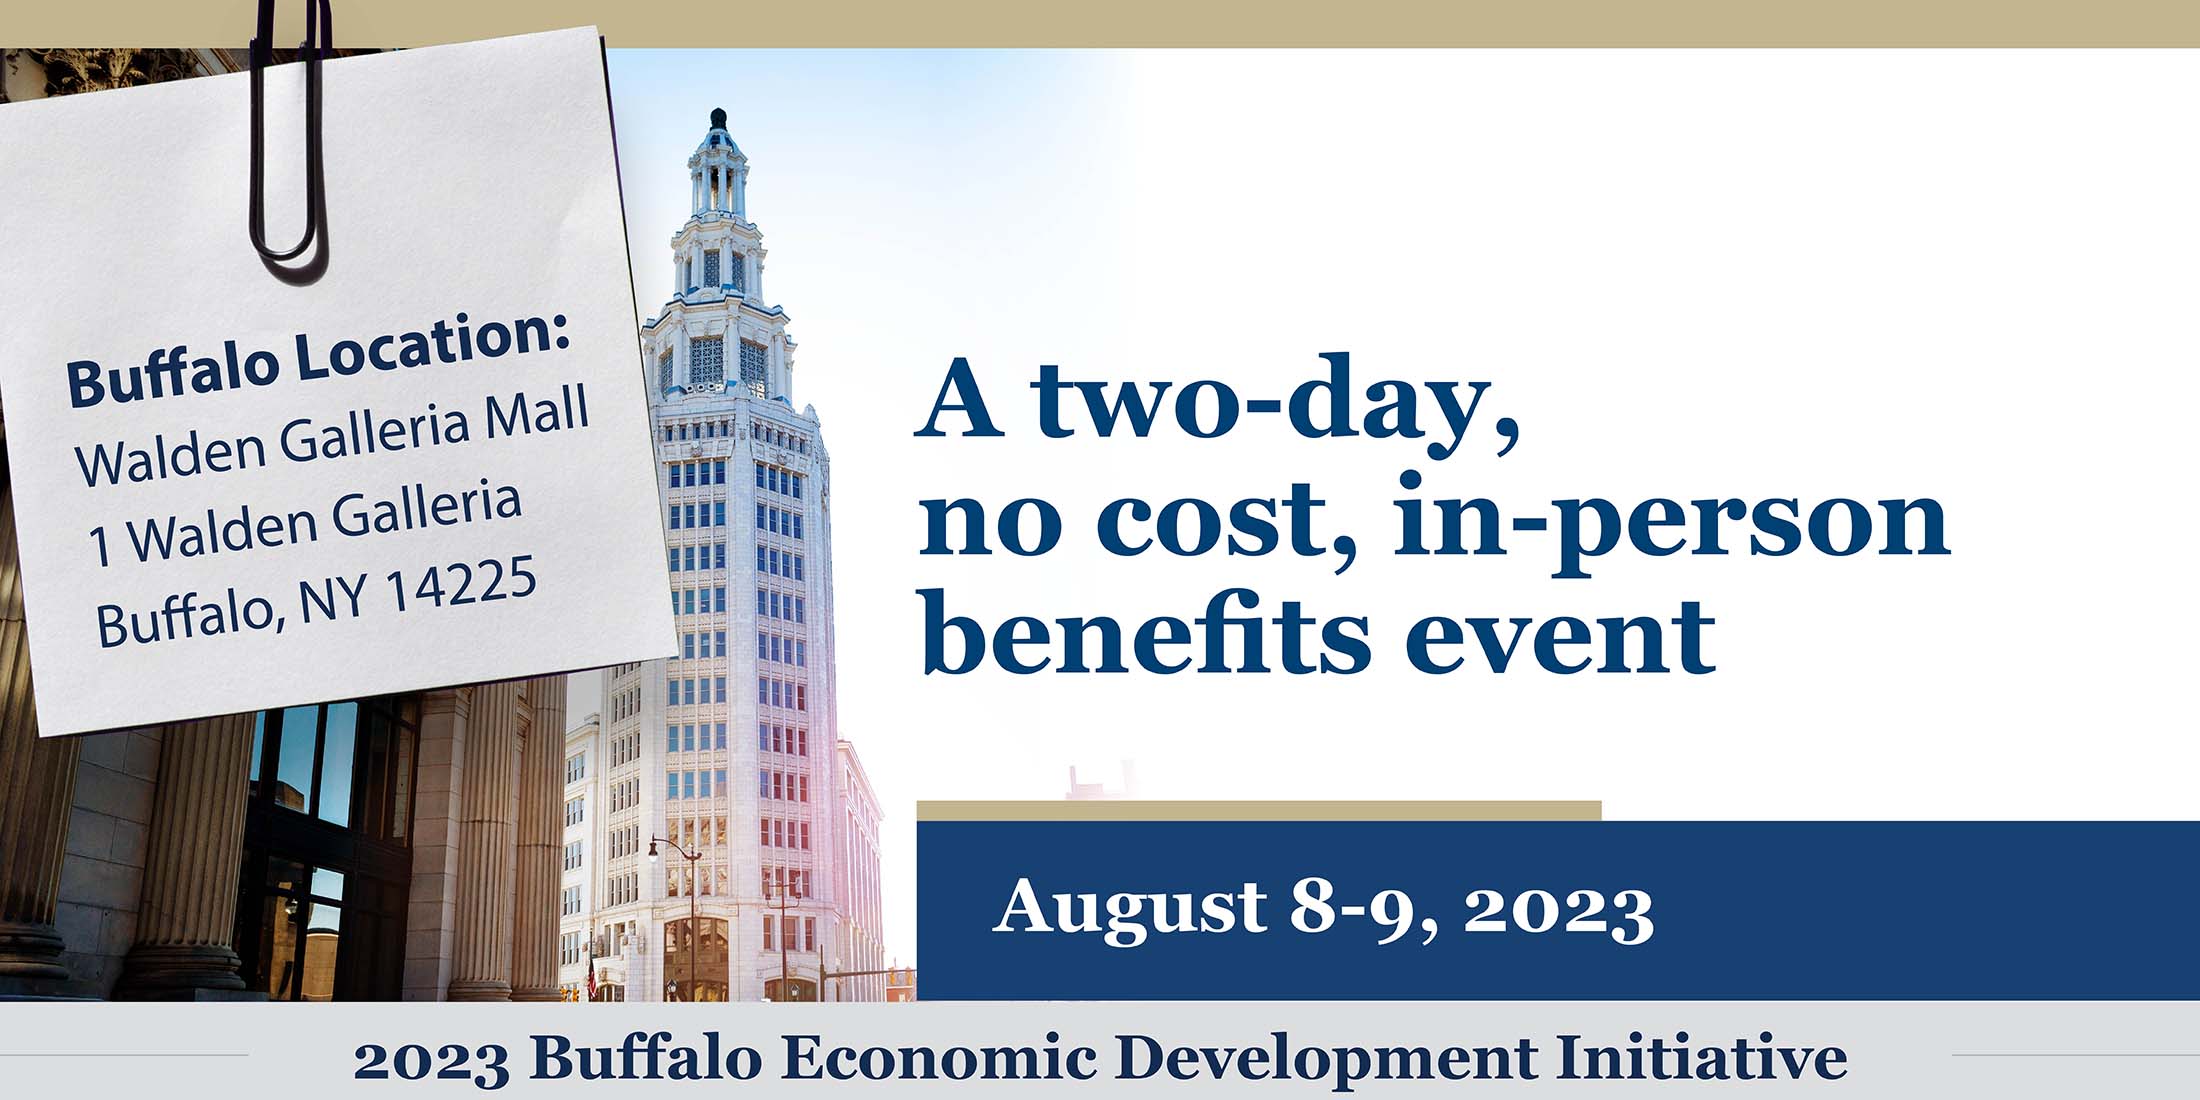 A two-day, no cost, in-person benefits event. August 8-9, 2023. 2023 Buffalo Economic Development Initiatives. Buffalo Location: Walden Galleria Mall 1 Walden Galleria Buffalo, NY 14225